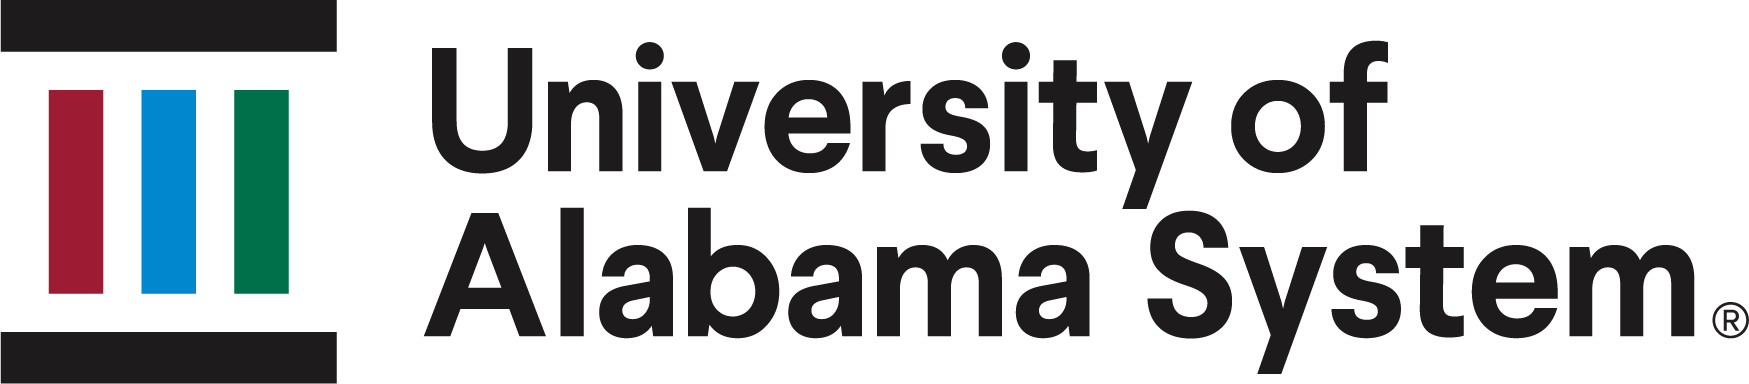 University of Alabama Systems